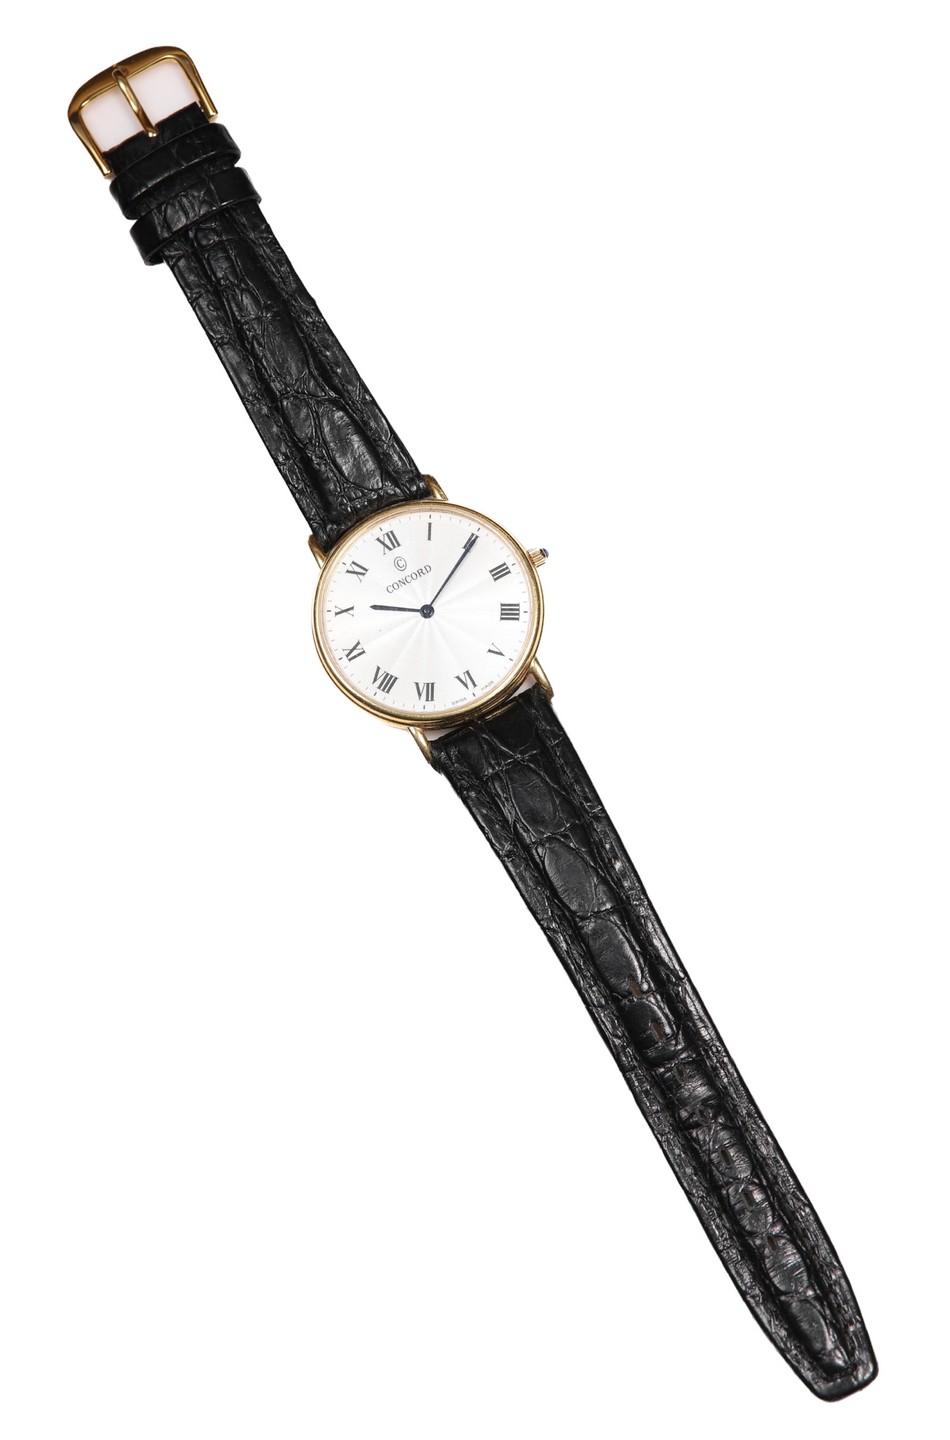 Concord 18K mens wristwatch model 2e05d3